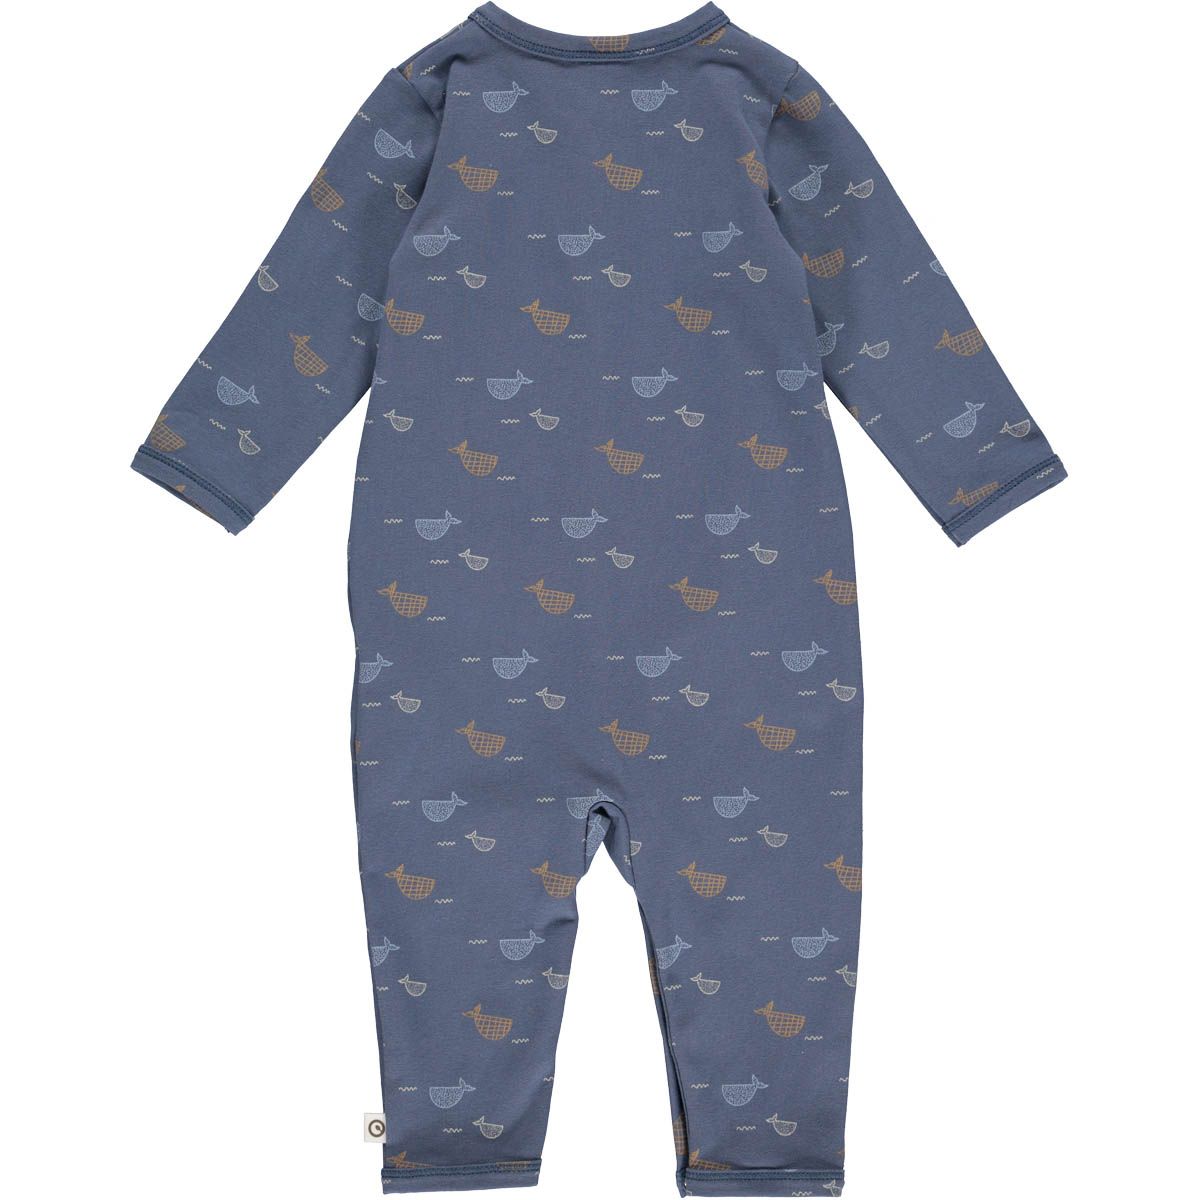 SALE Musli Baby SleepSuit in Blue Whale Print